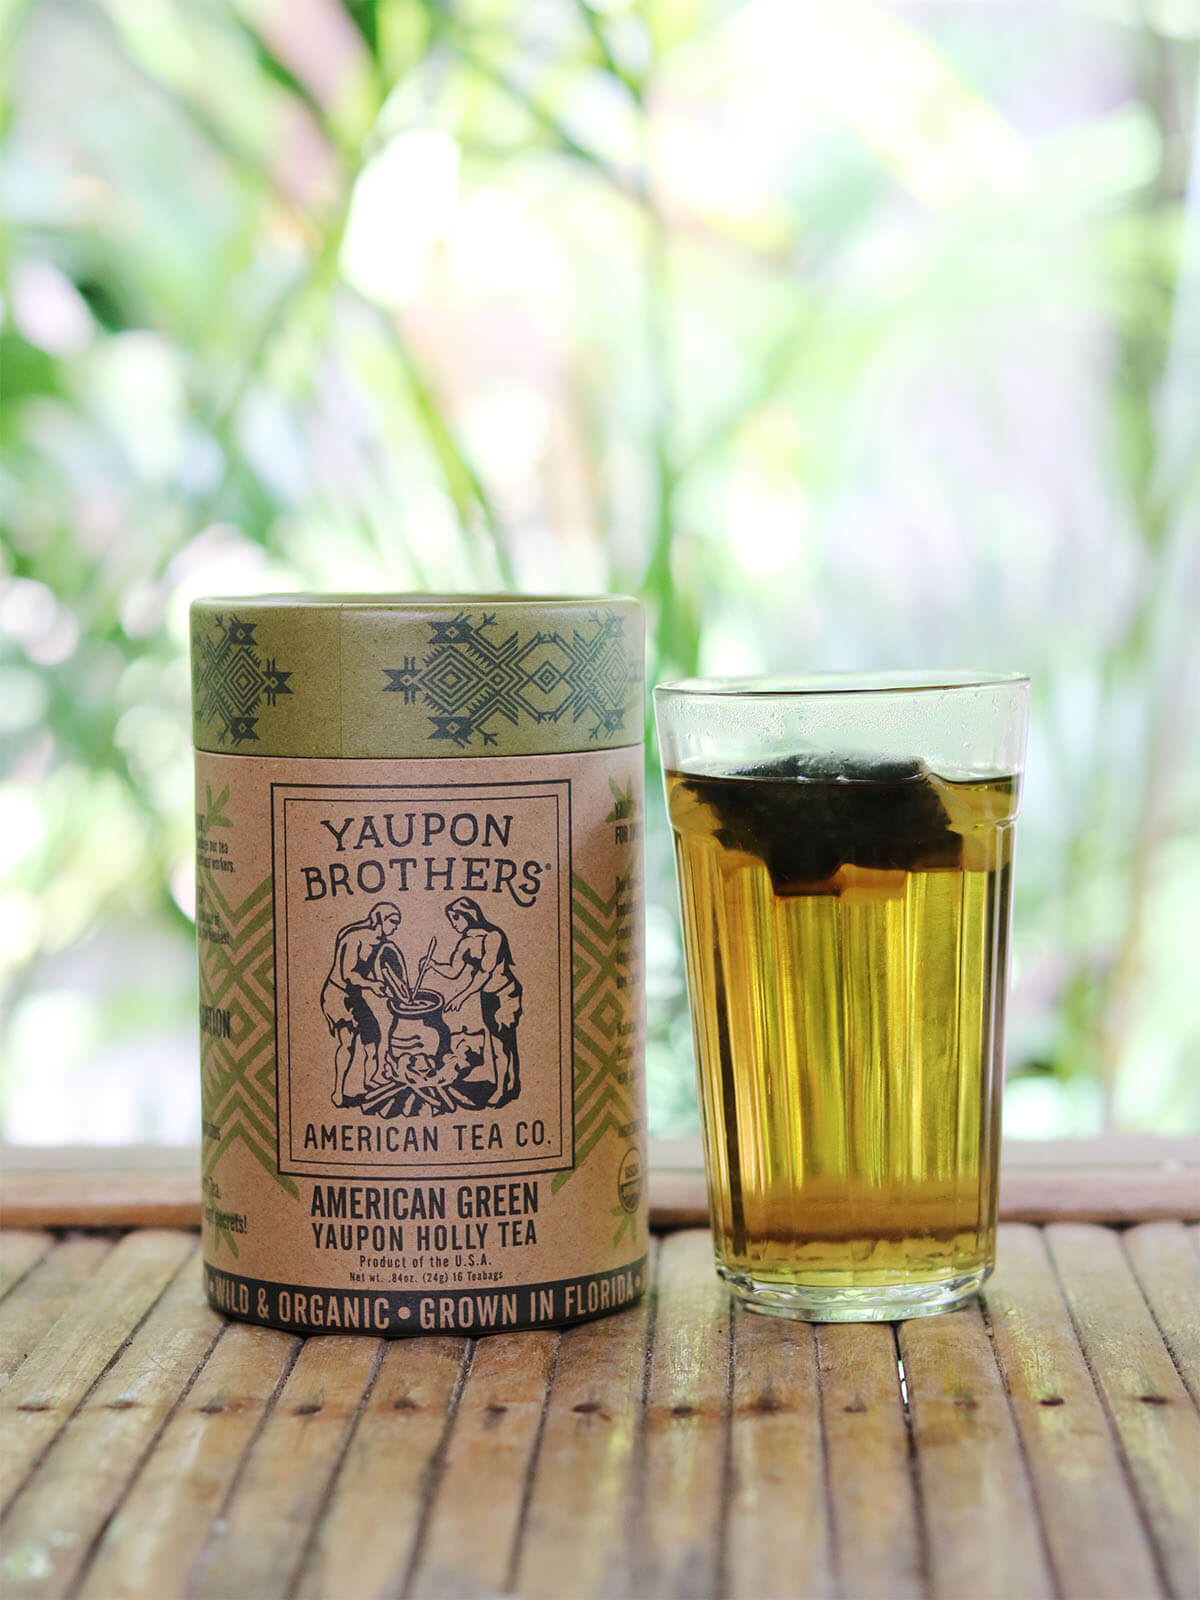 American Green Yaupon Tea